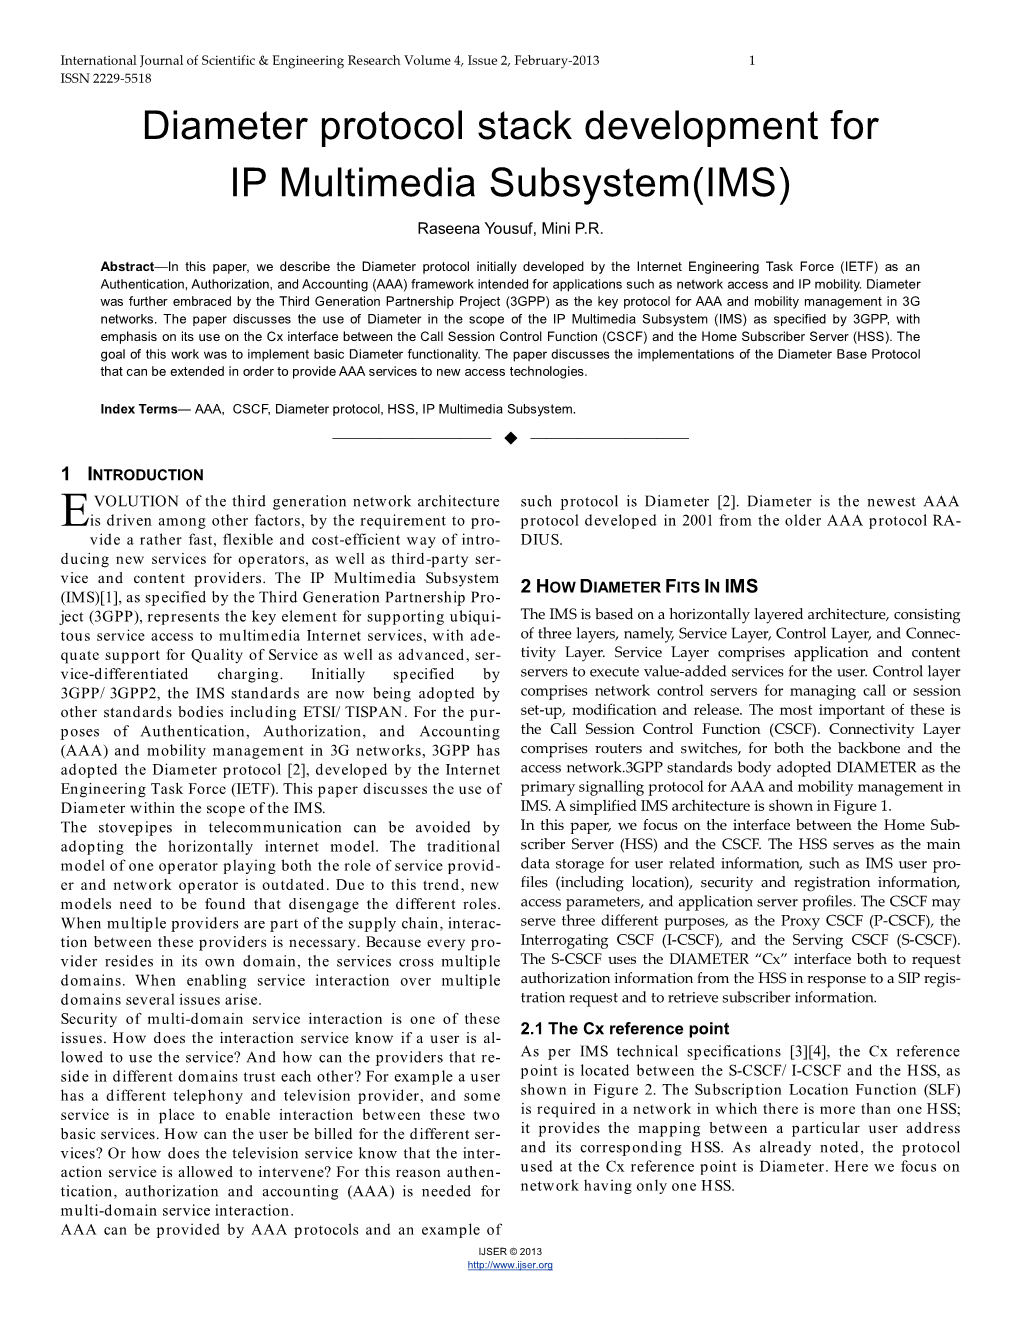 Diameter Protocol Stack Development for IP Multimedia Subsystem(IMS)